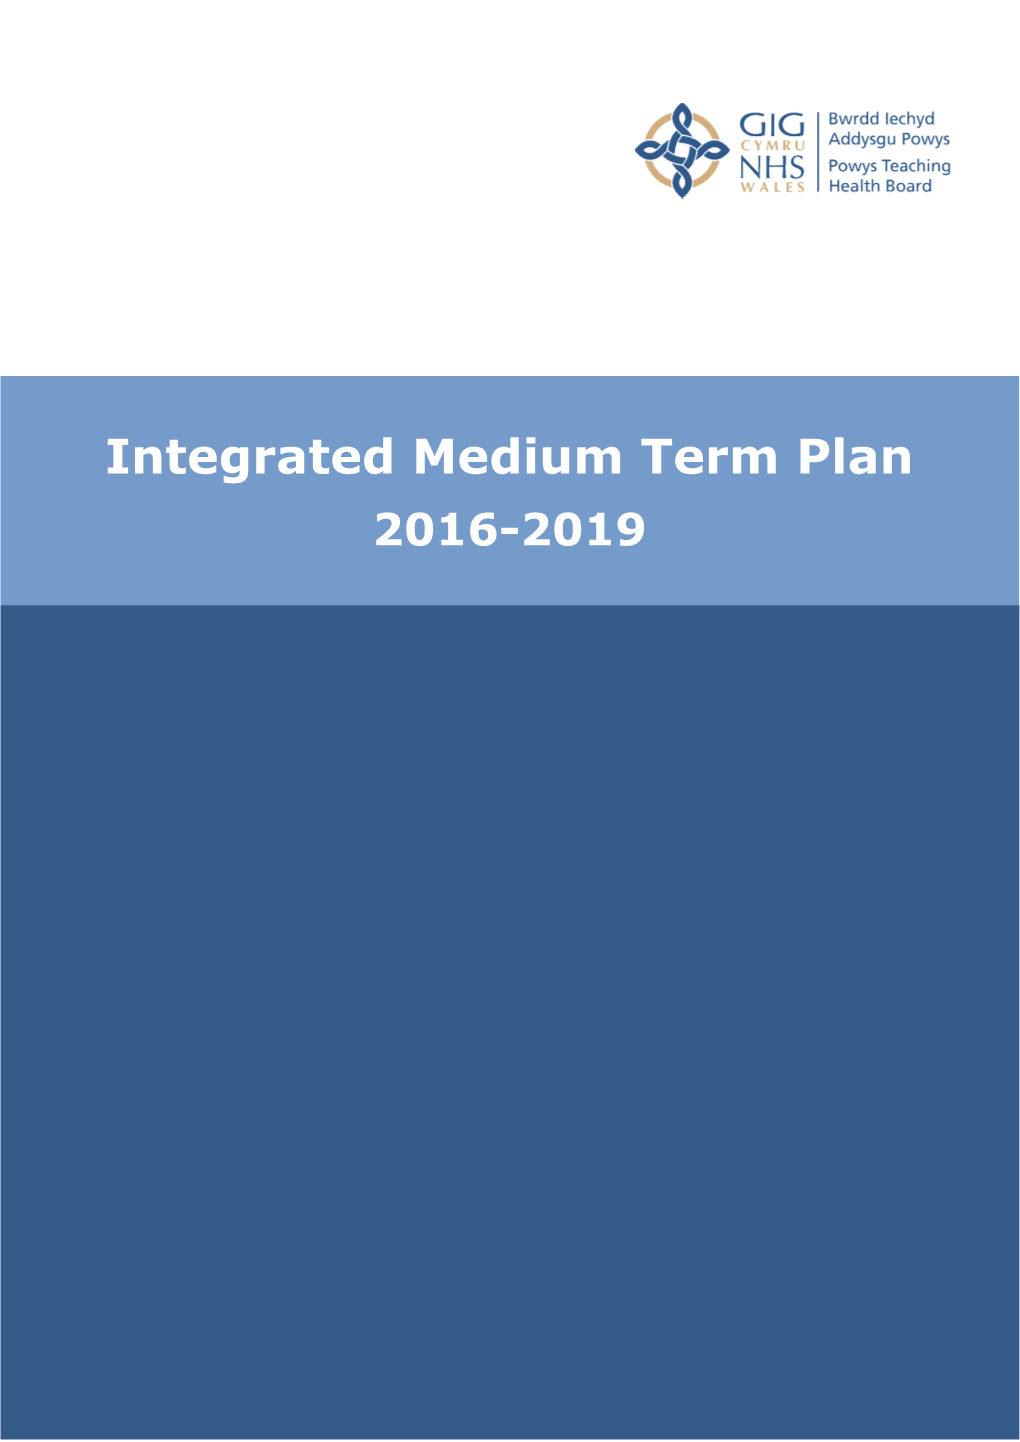 Integrated Medium Term Plan 2016-2019